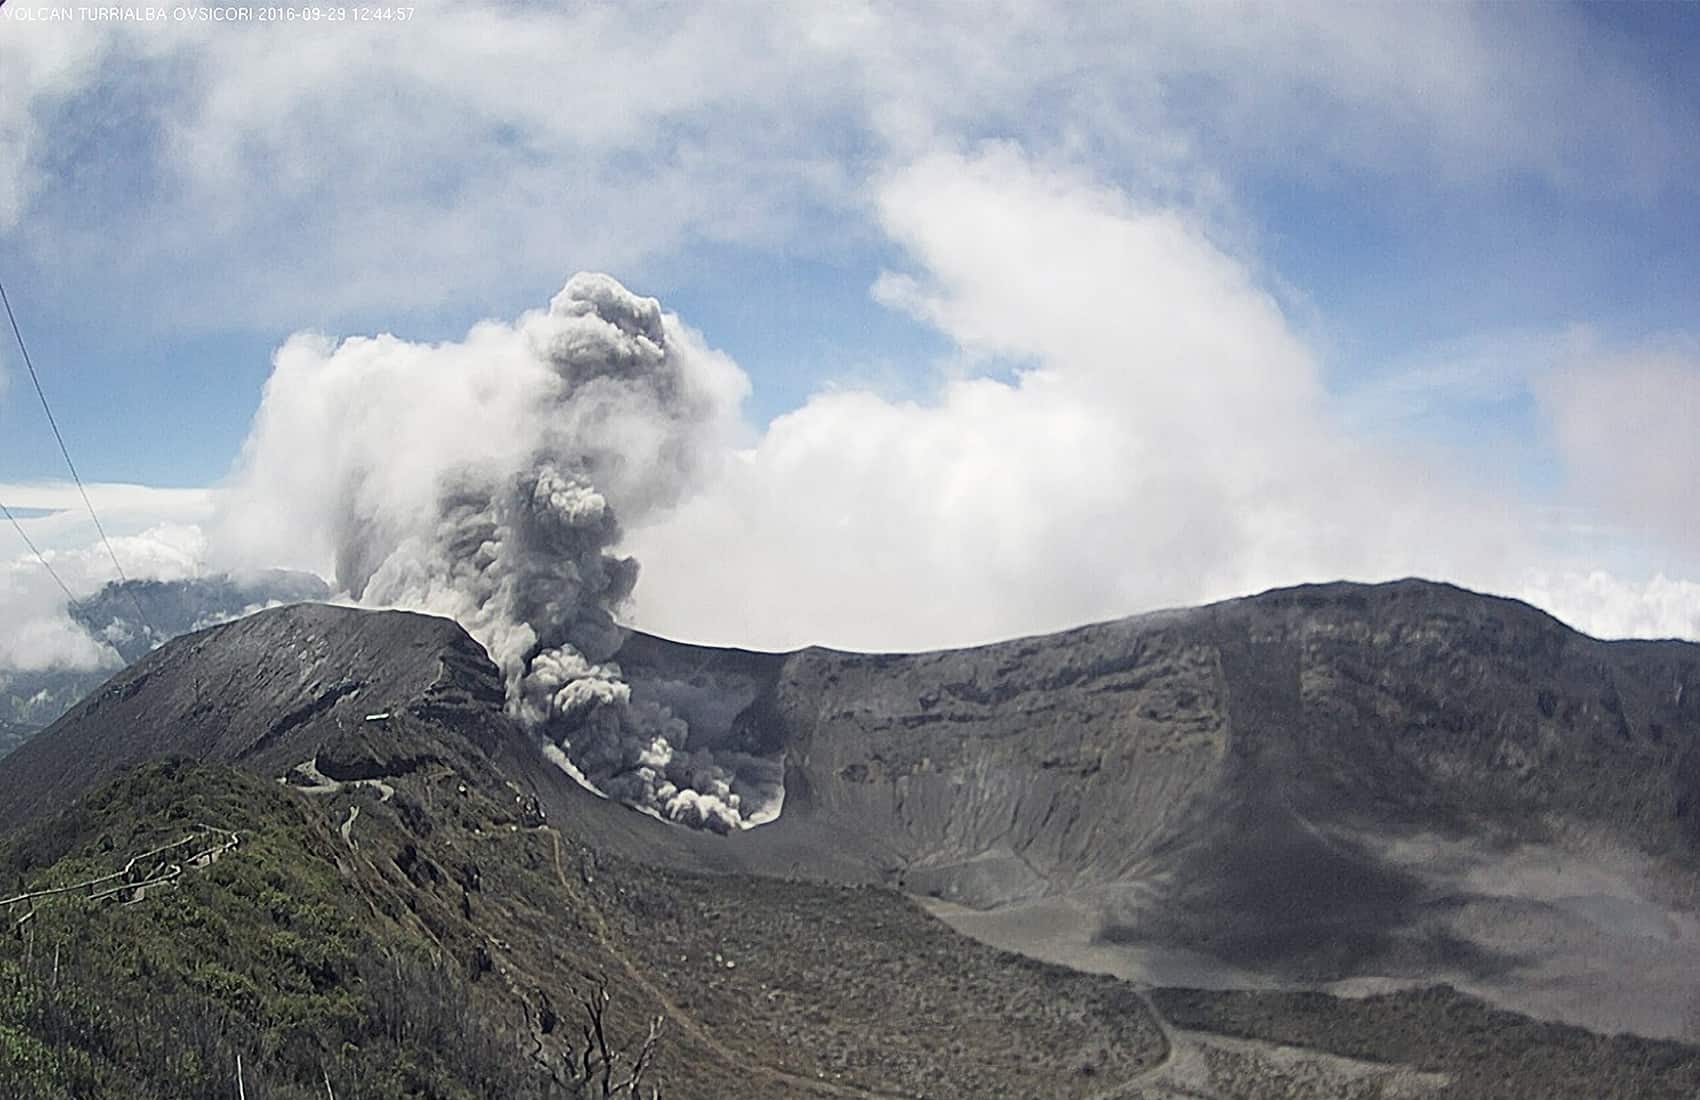 Turrialba Volcano, Sept. 29 2016.